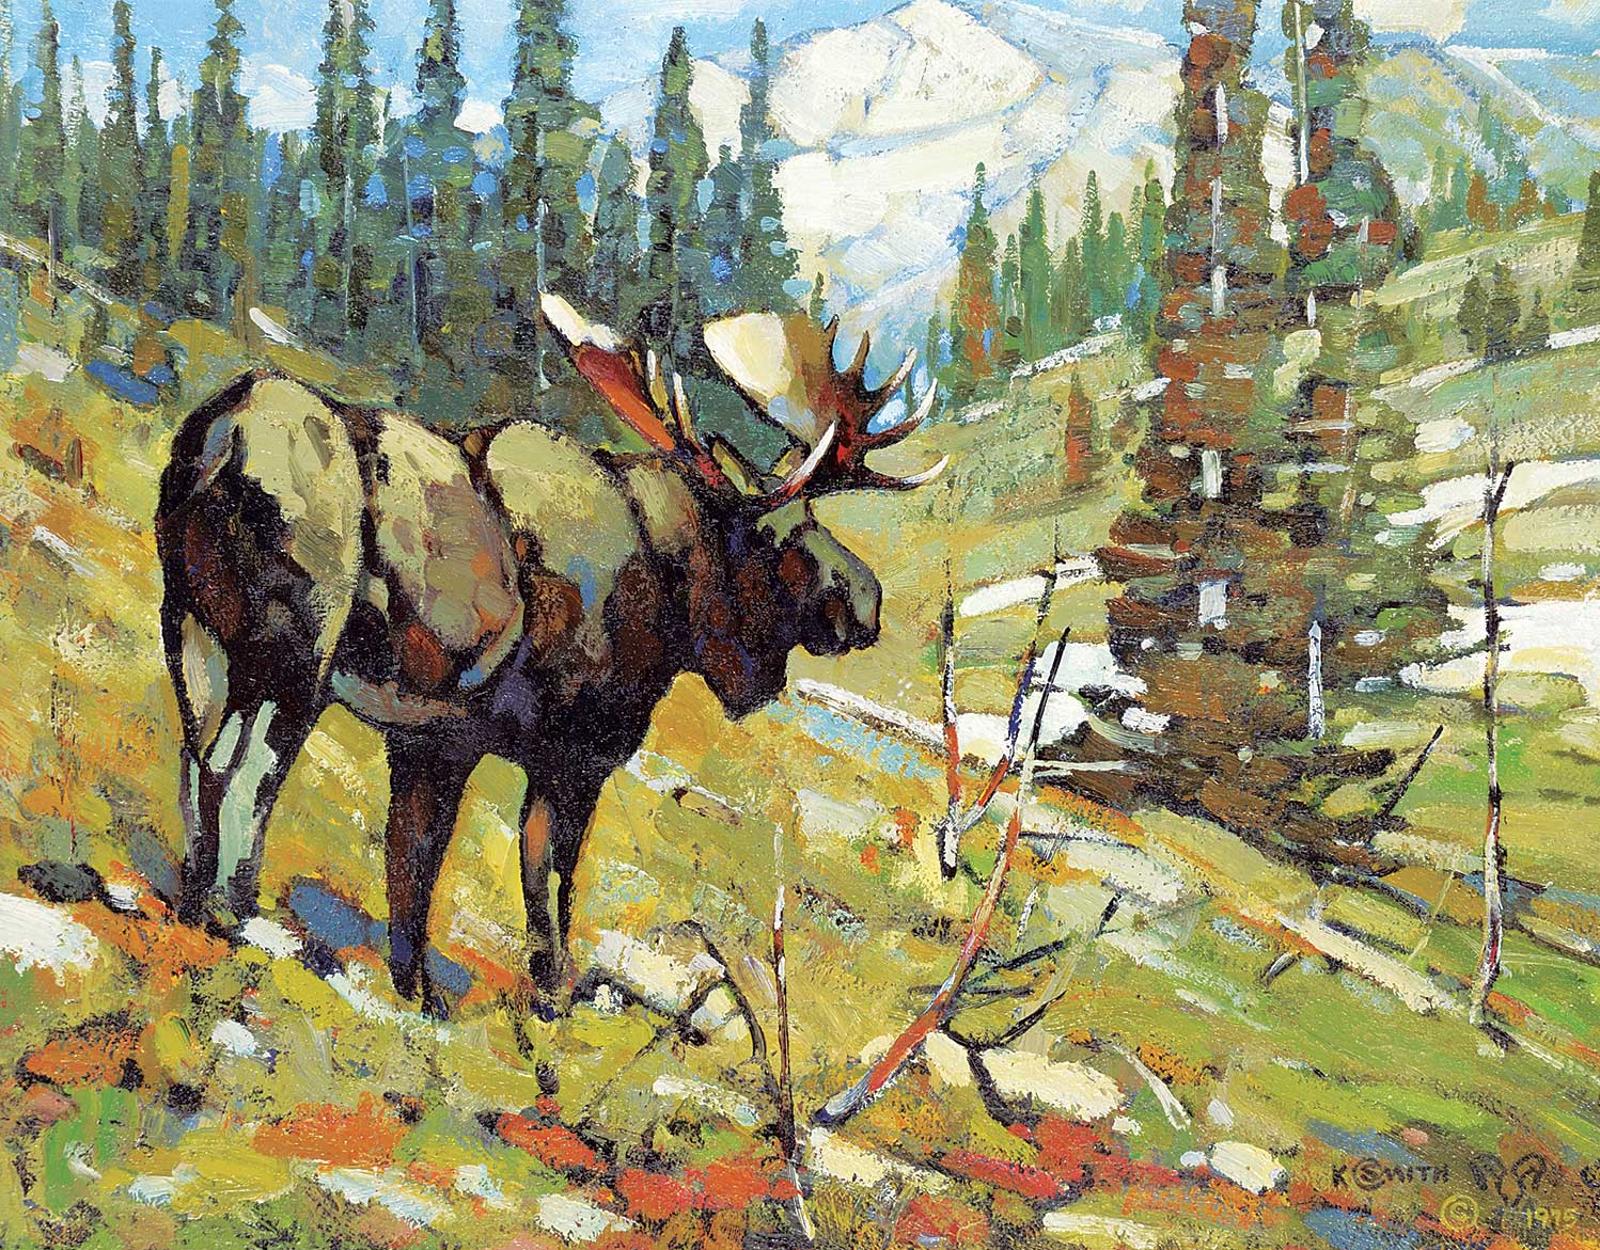 Keith Comock Smith (1924-2000) - Untitled - Lone Moose